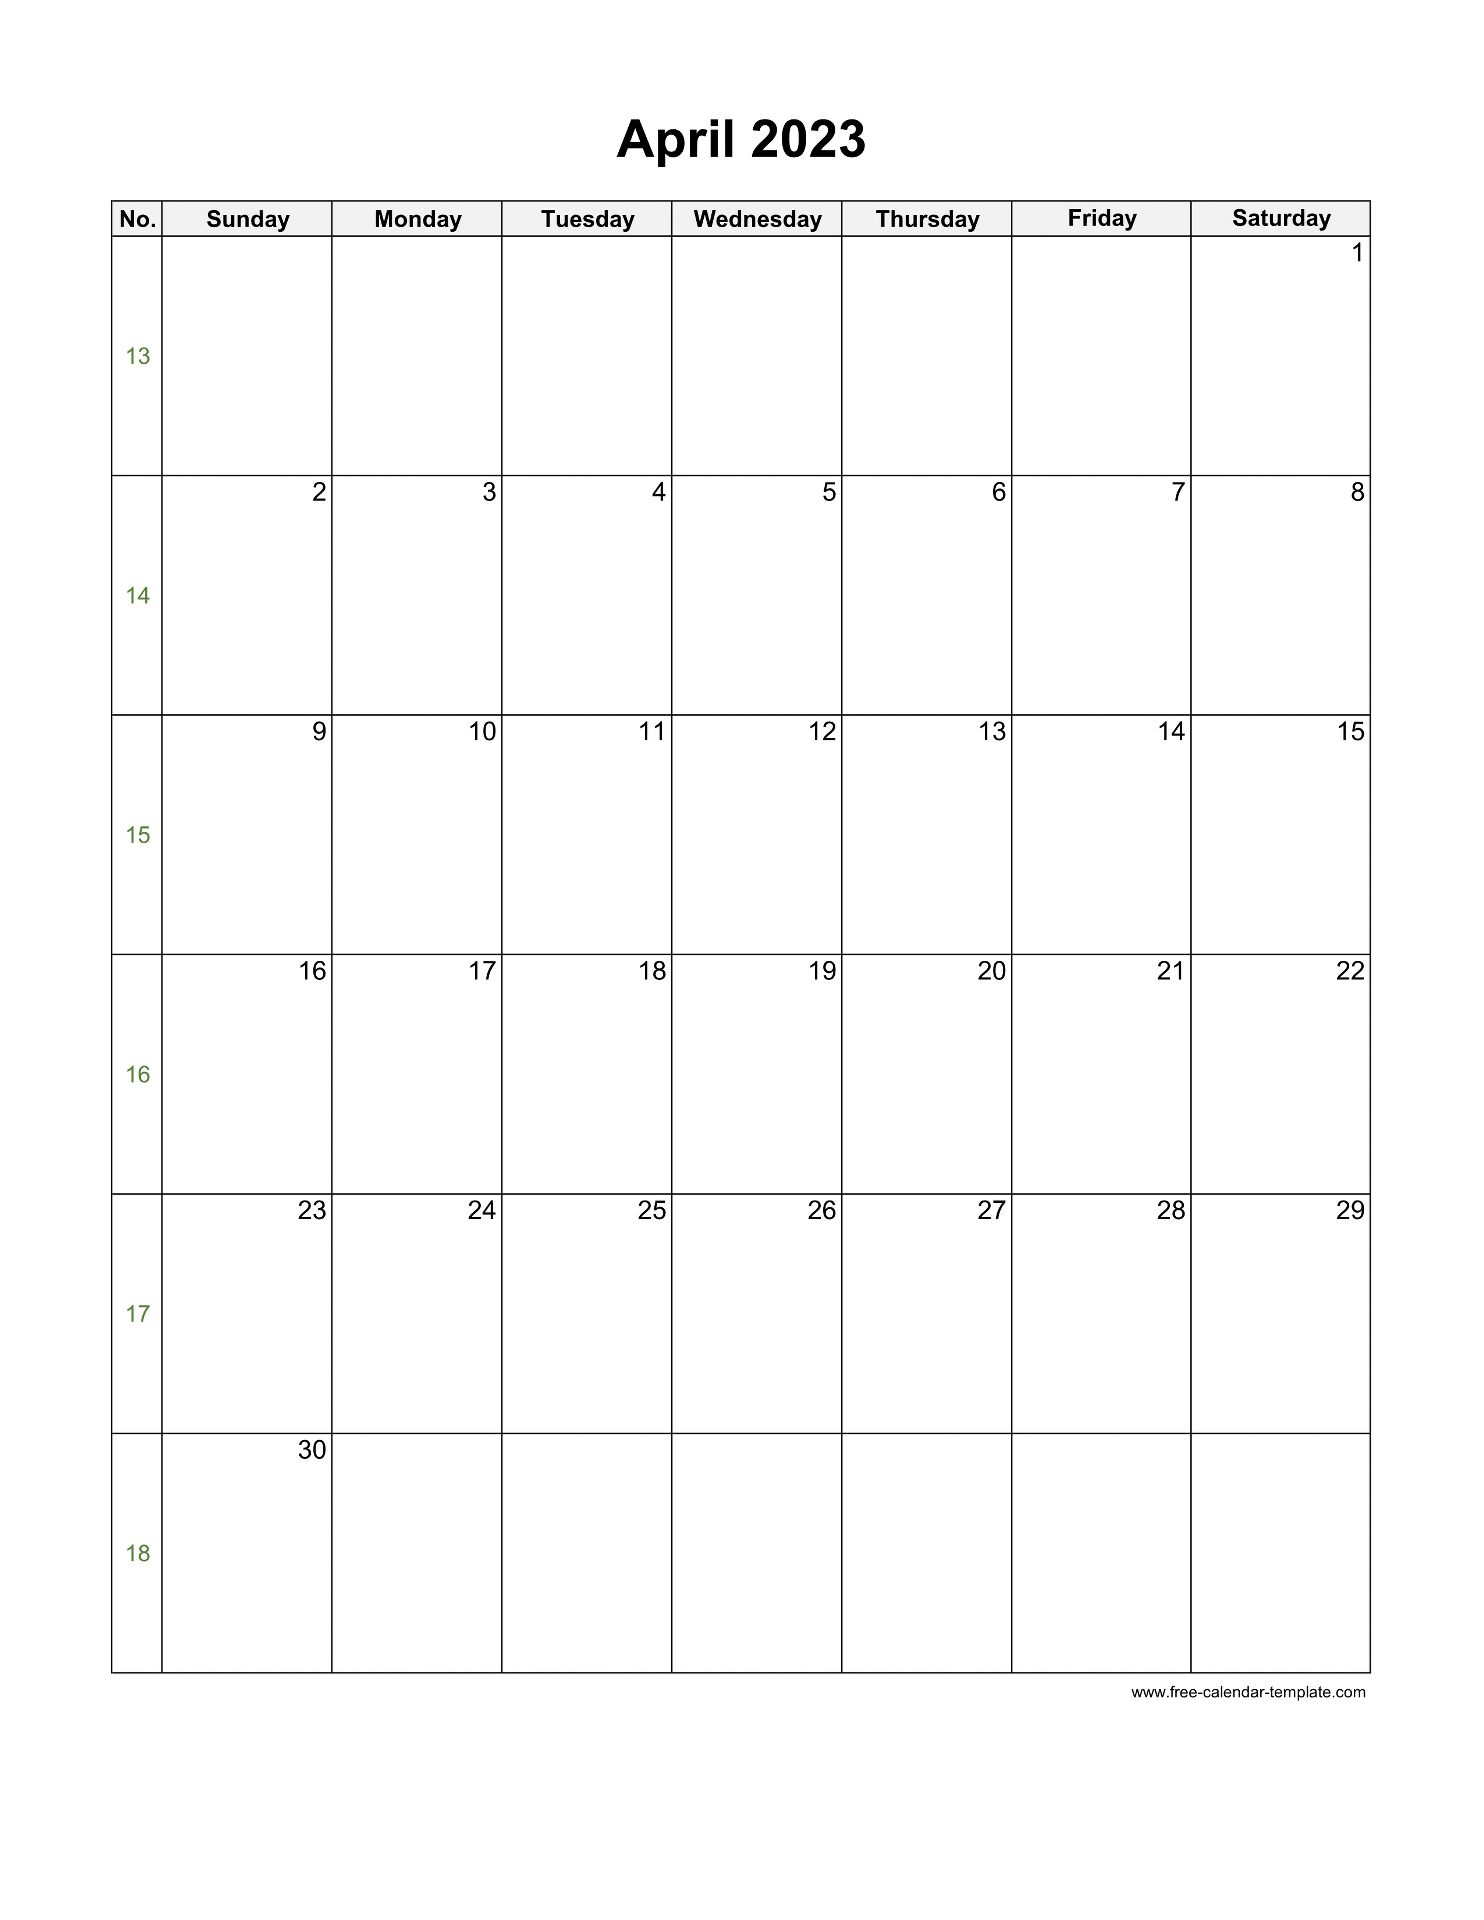 April And May 2024 Calendar Calendar Quickly April 2023 Calendar Free